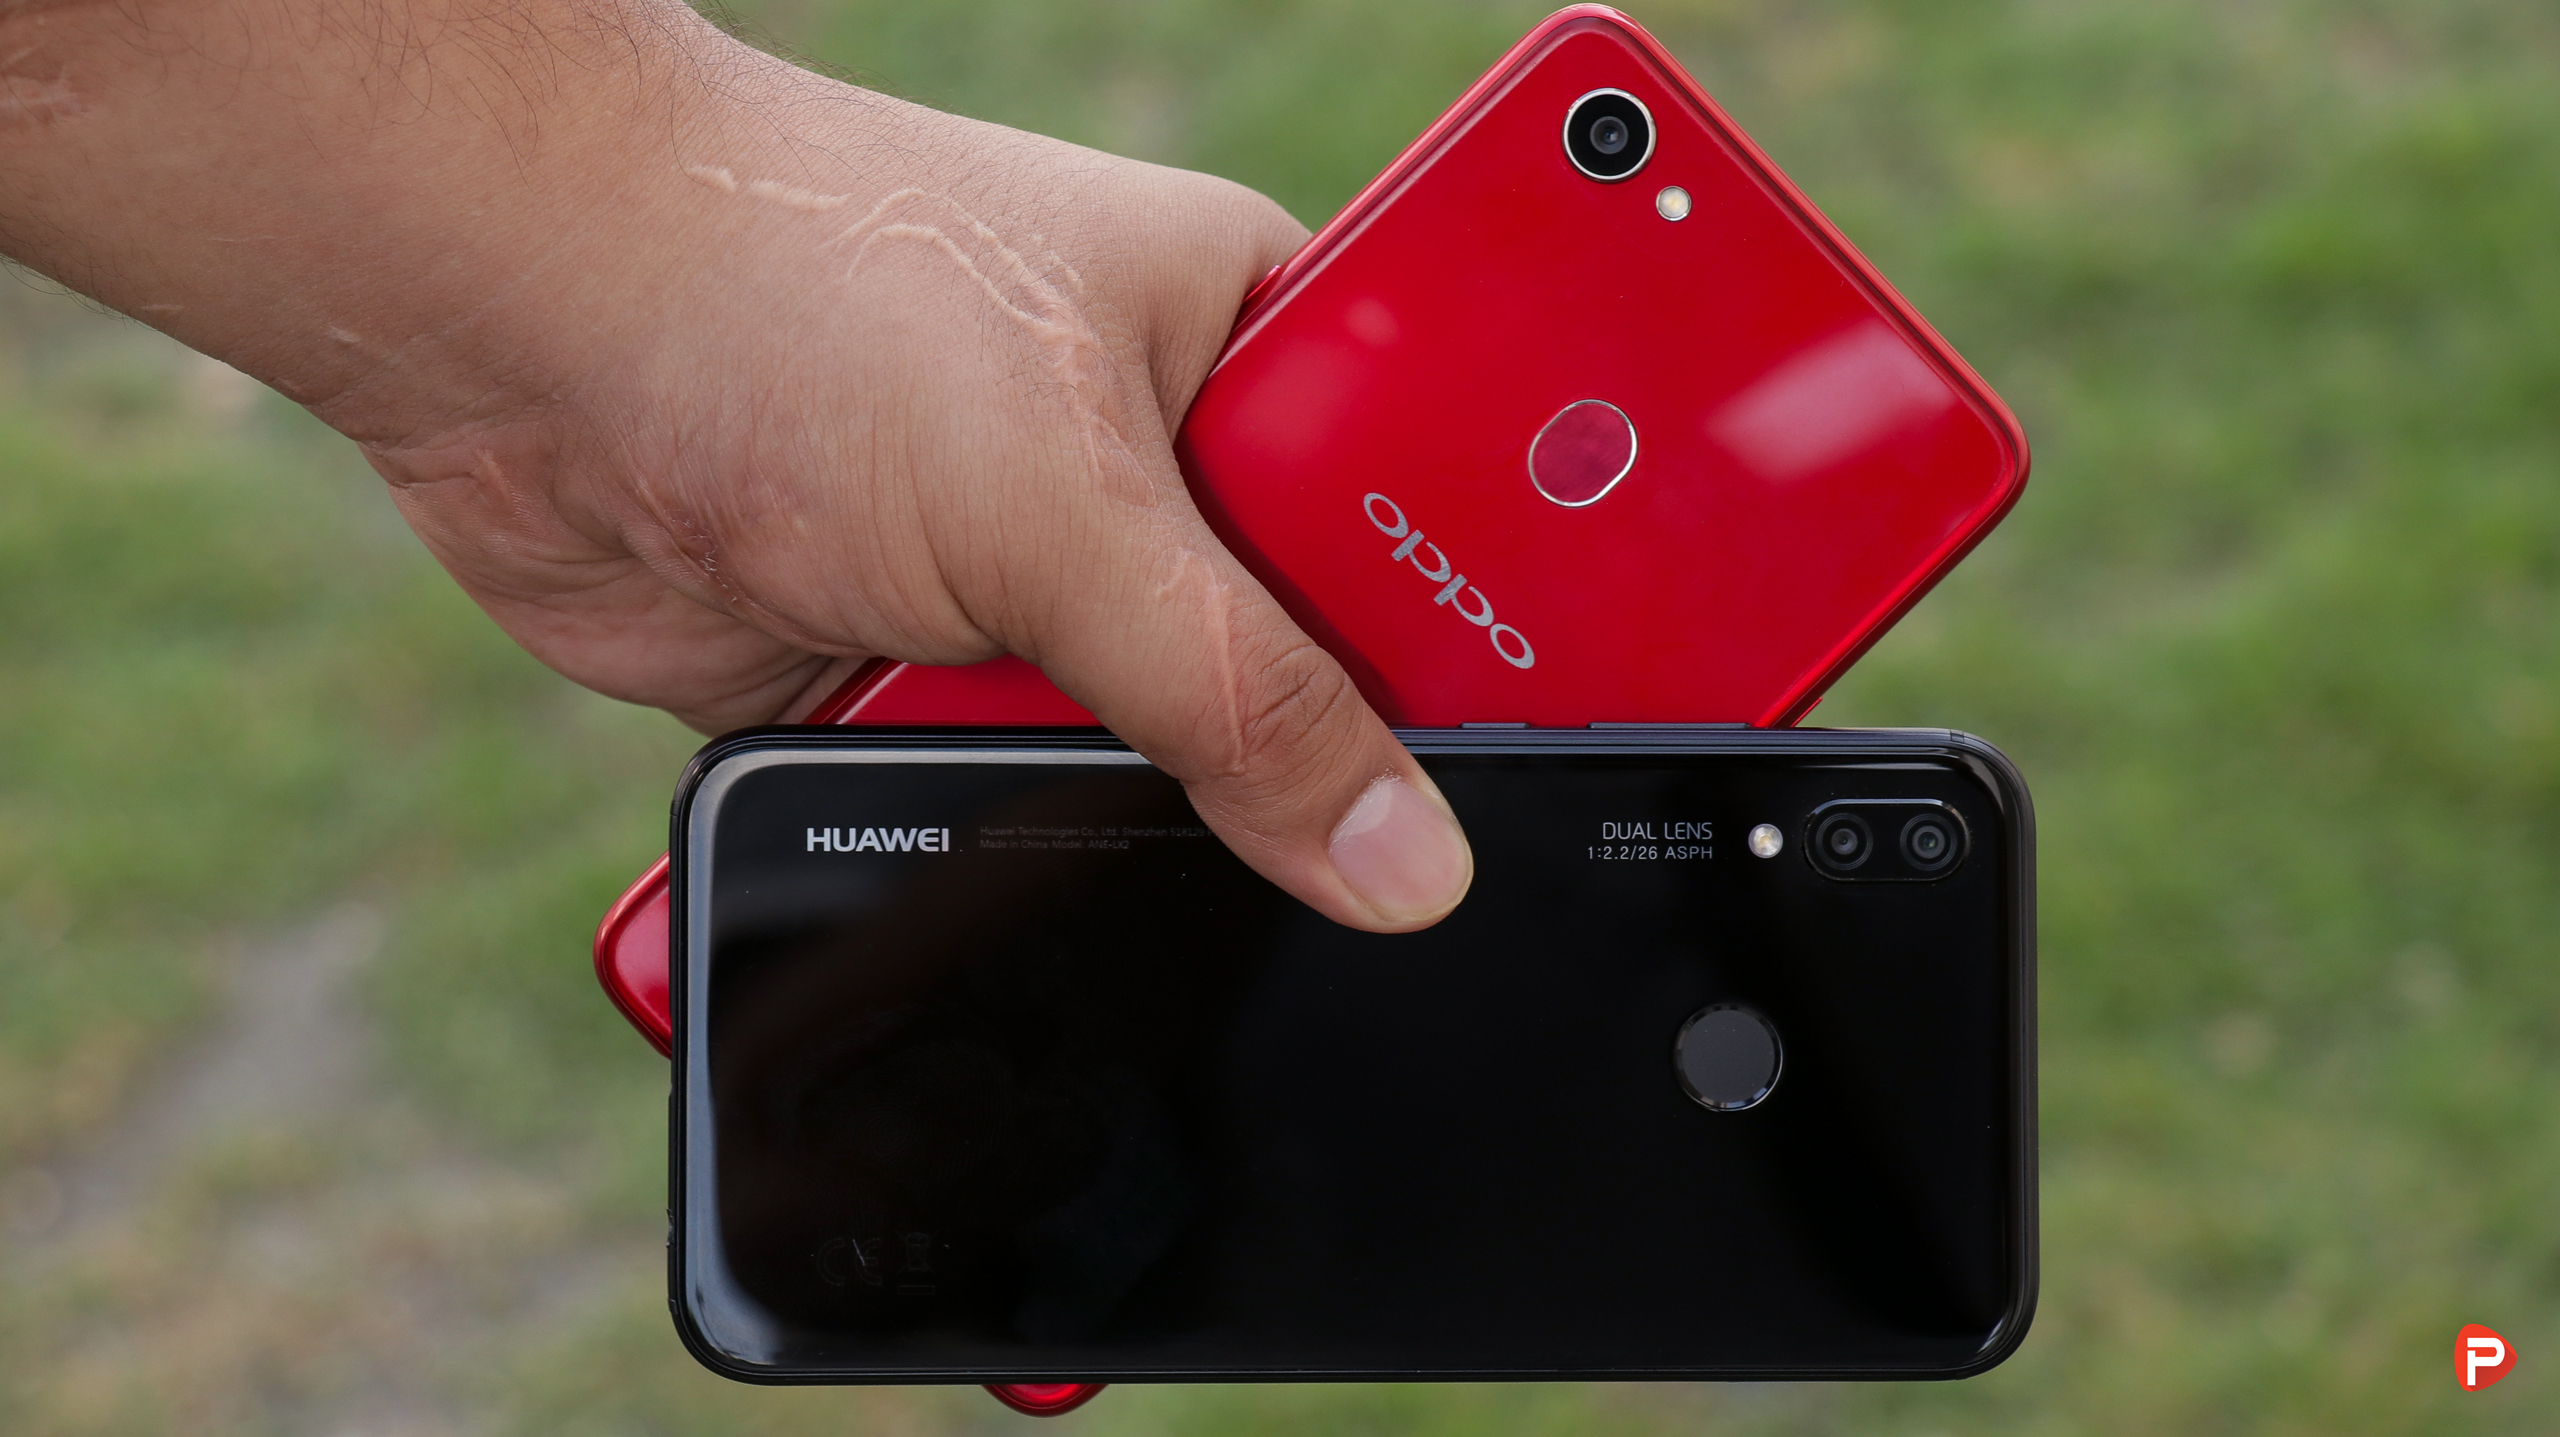 Huawei Nova 3e is better than the Oppo F7: 5 reasons